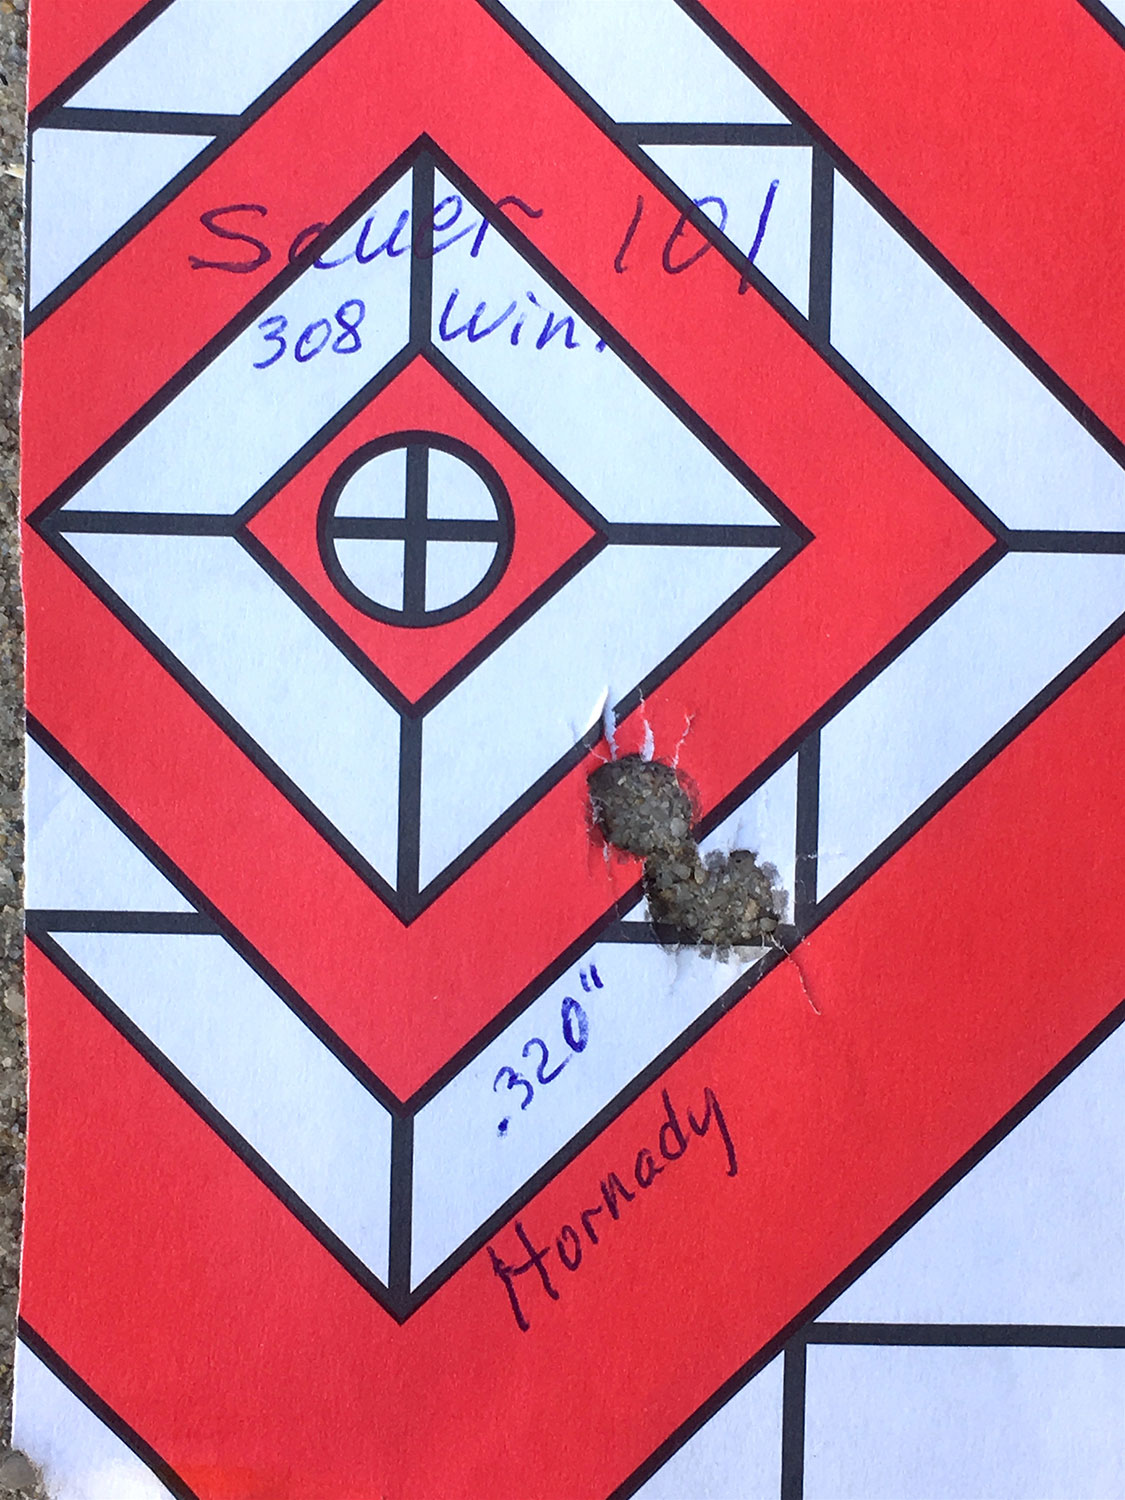 3-shot group on target